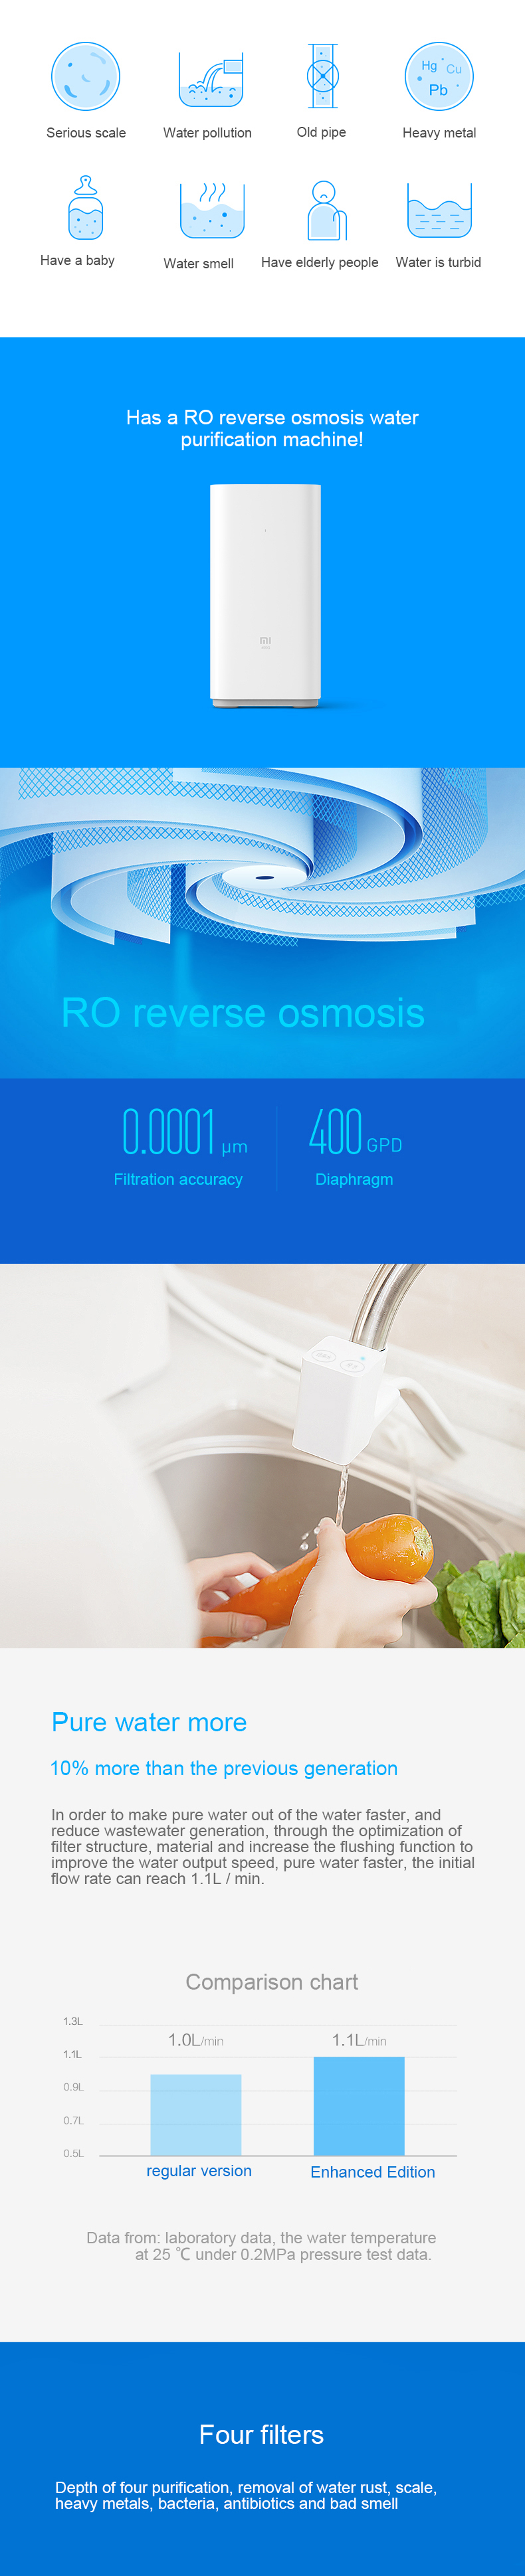 Xiaomi Water Filter